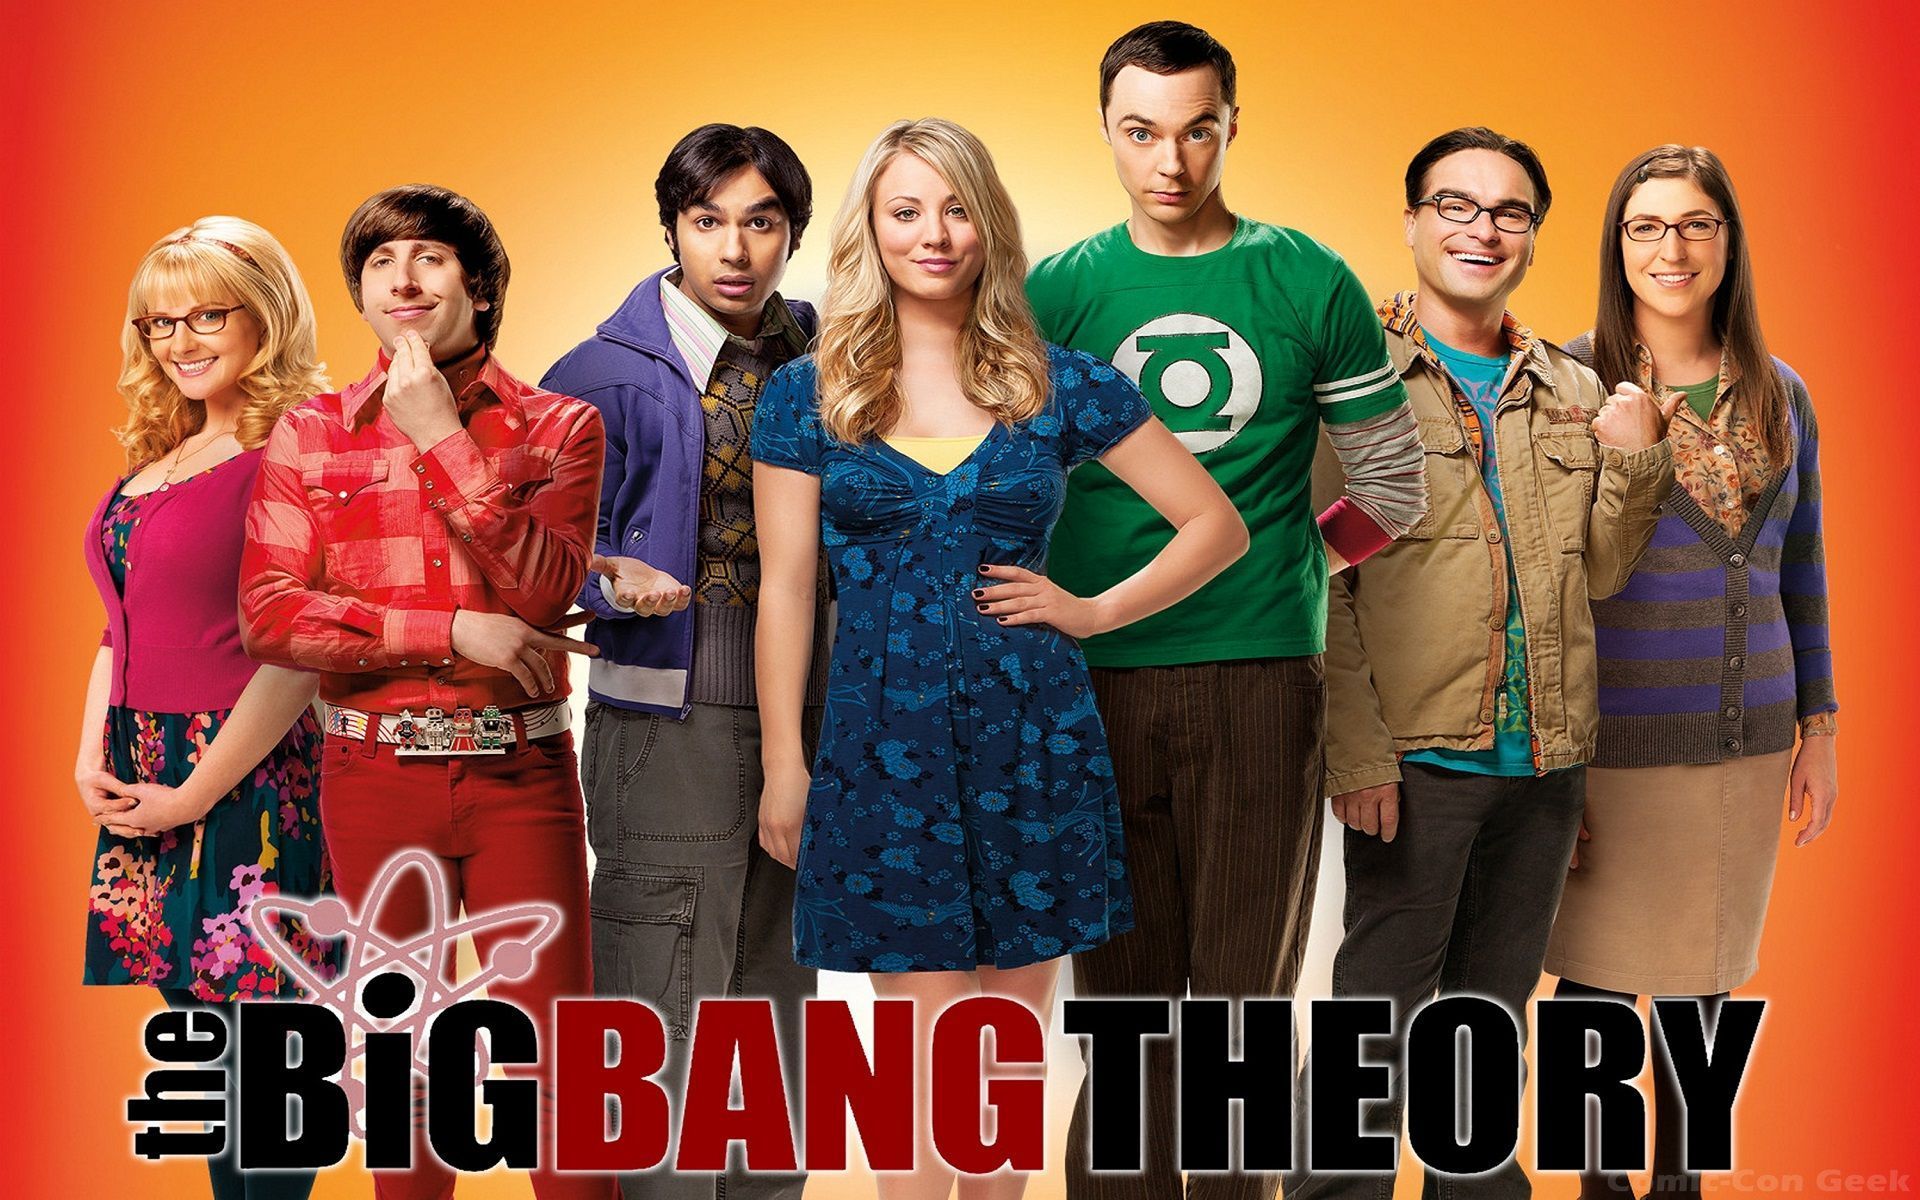 The Big Bang Theory TV Show Wallpapers | CELEBWALLPIX